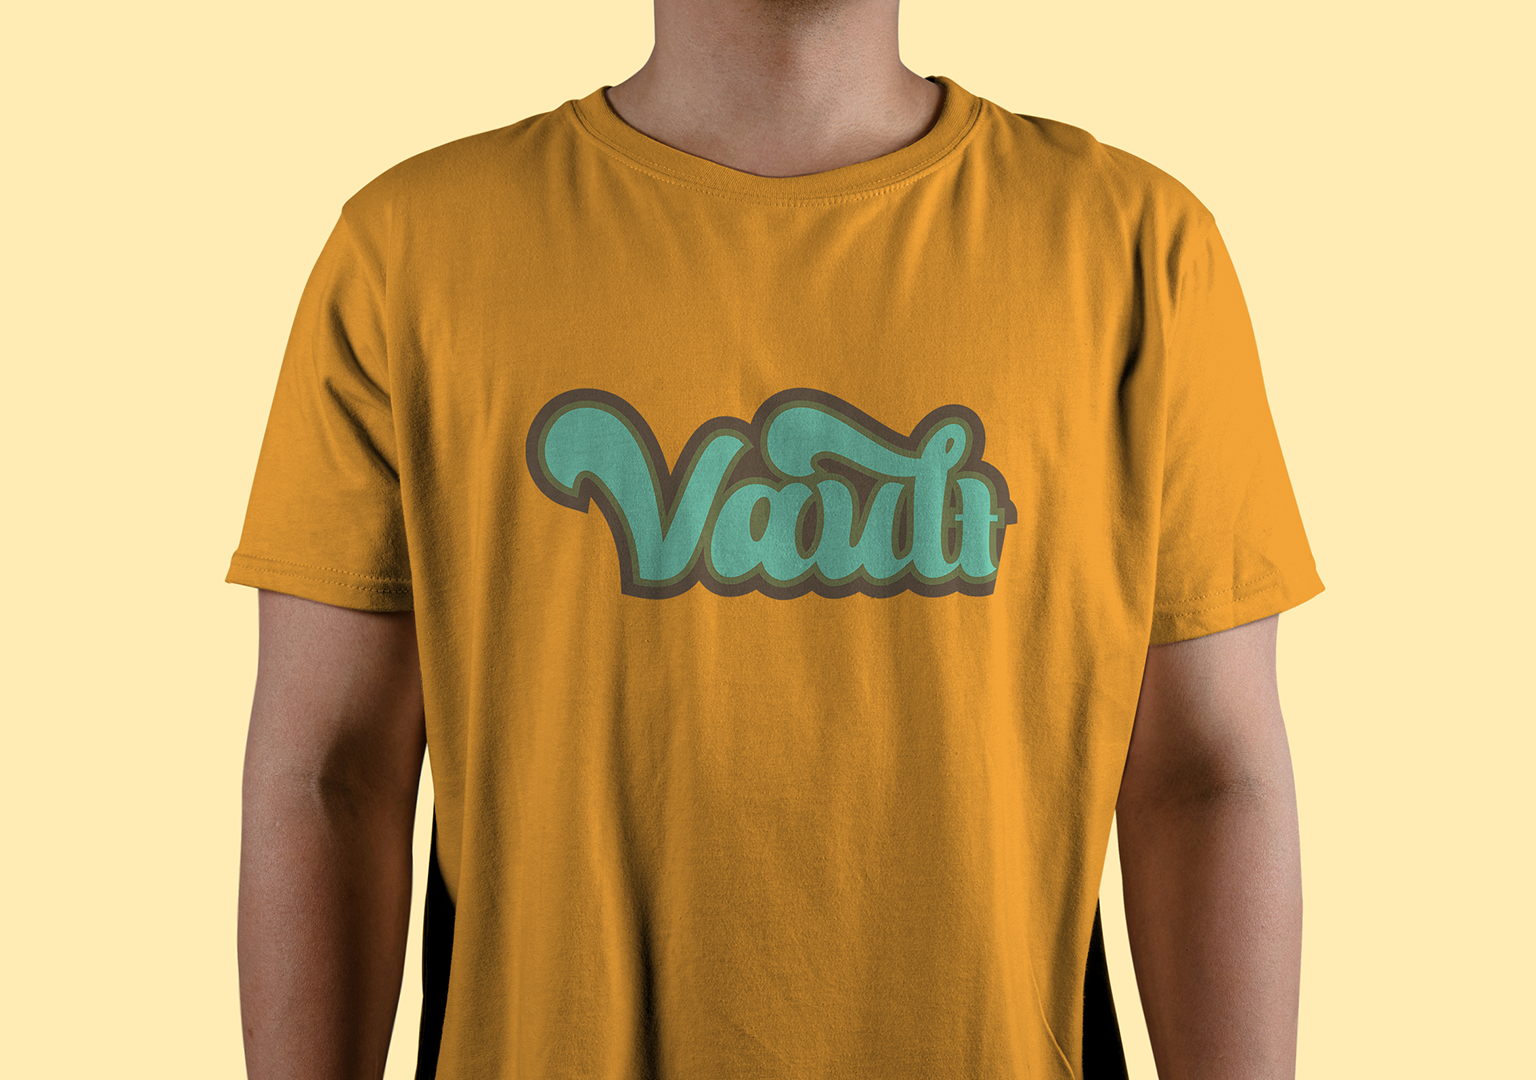 Vault Logo on t-shirt mockup